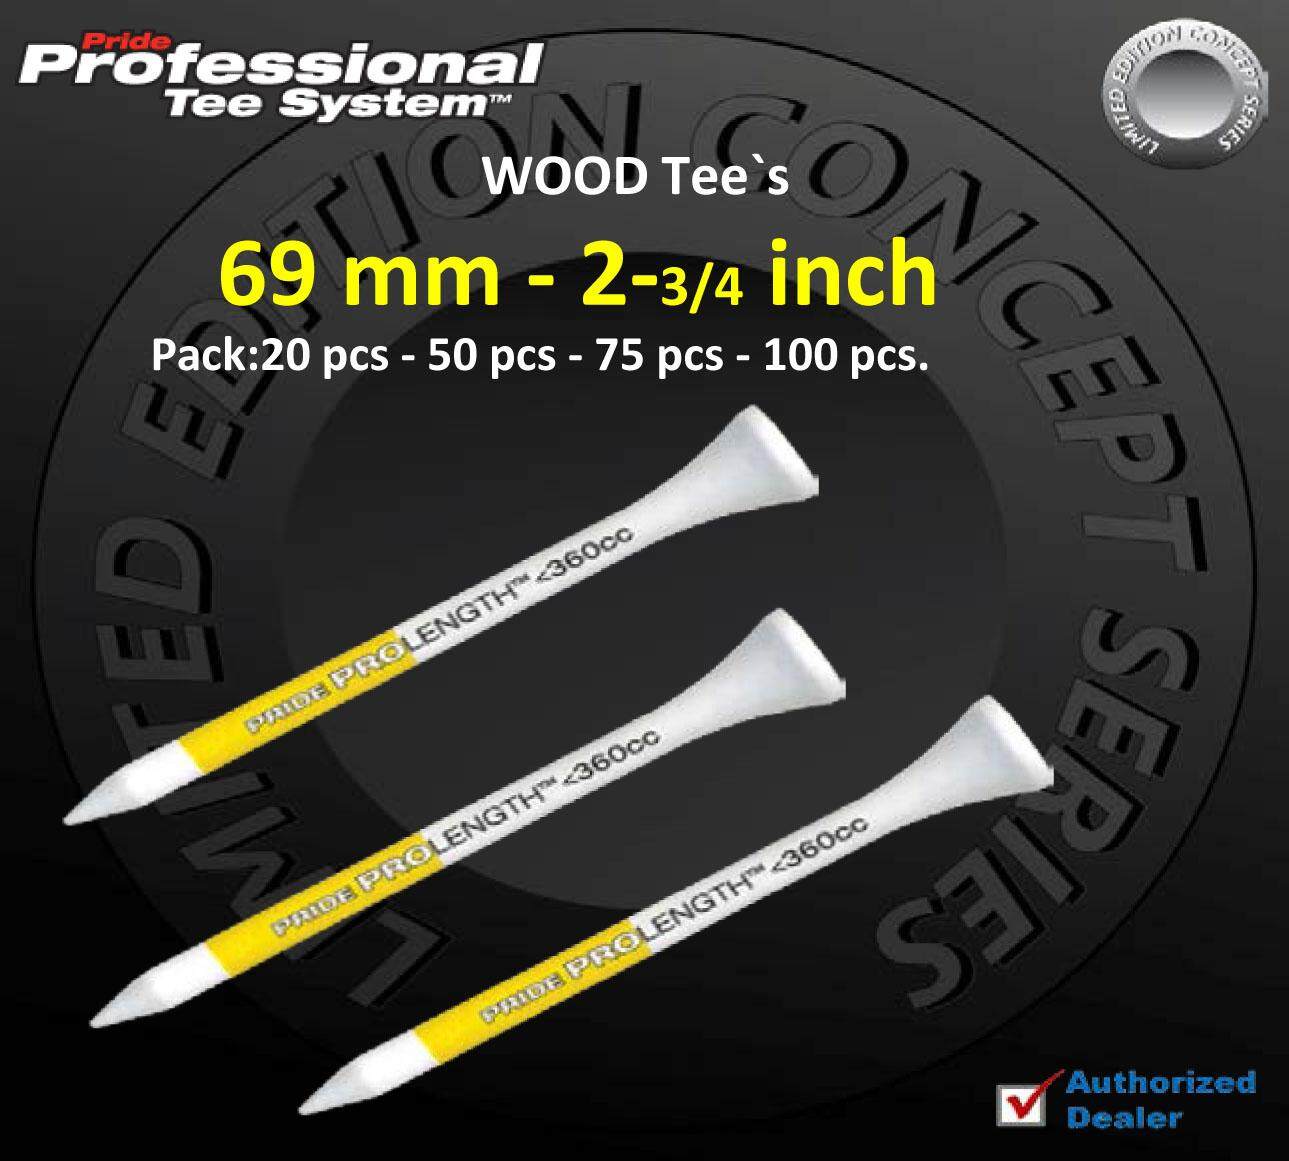 Golf Pride Professional Pts Wood Tee 69 Mm/ 2-3/4 Inch ( Pack: 20-50-75-100 Pcs ). 